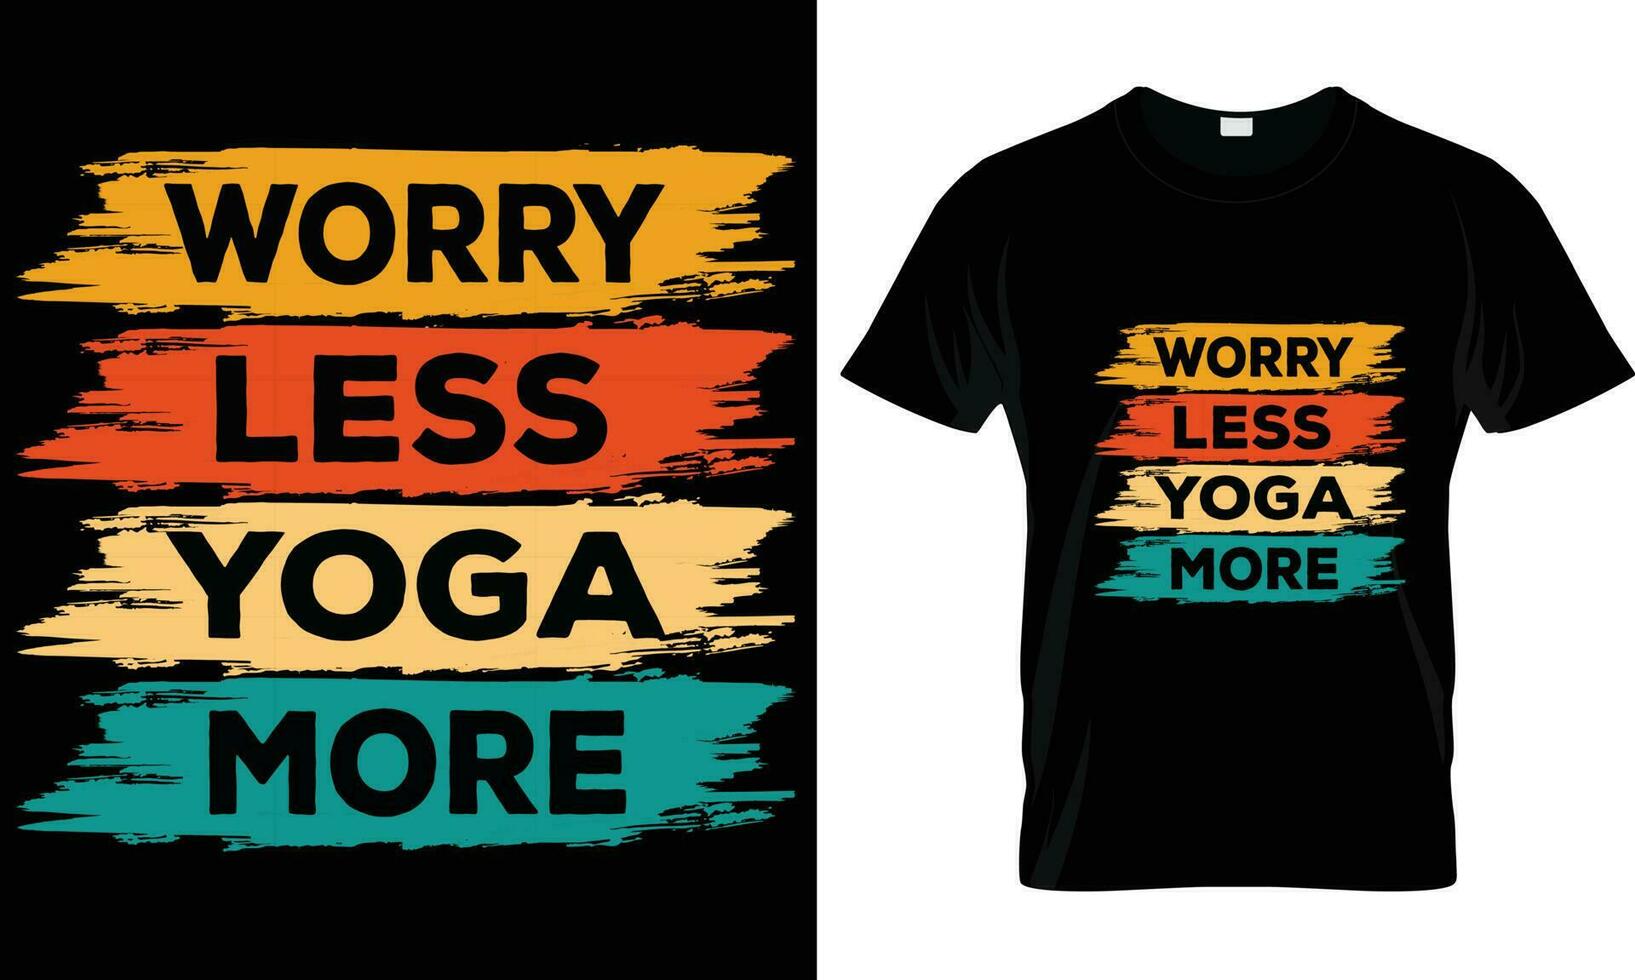 yoga t-shirt ontwerp grafisch vector. vector